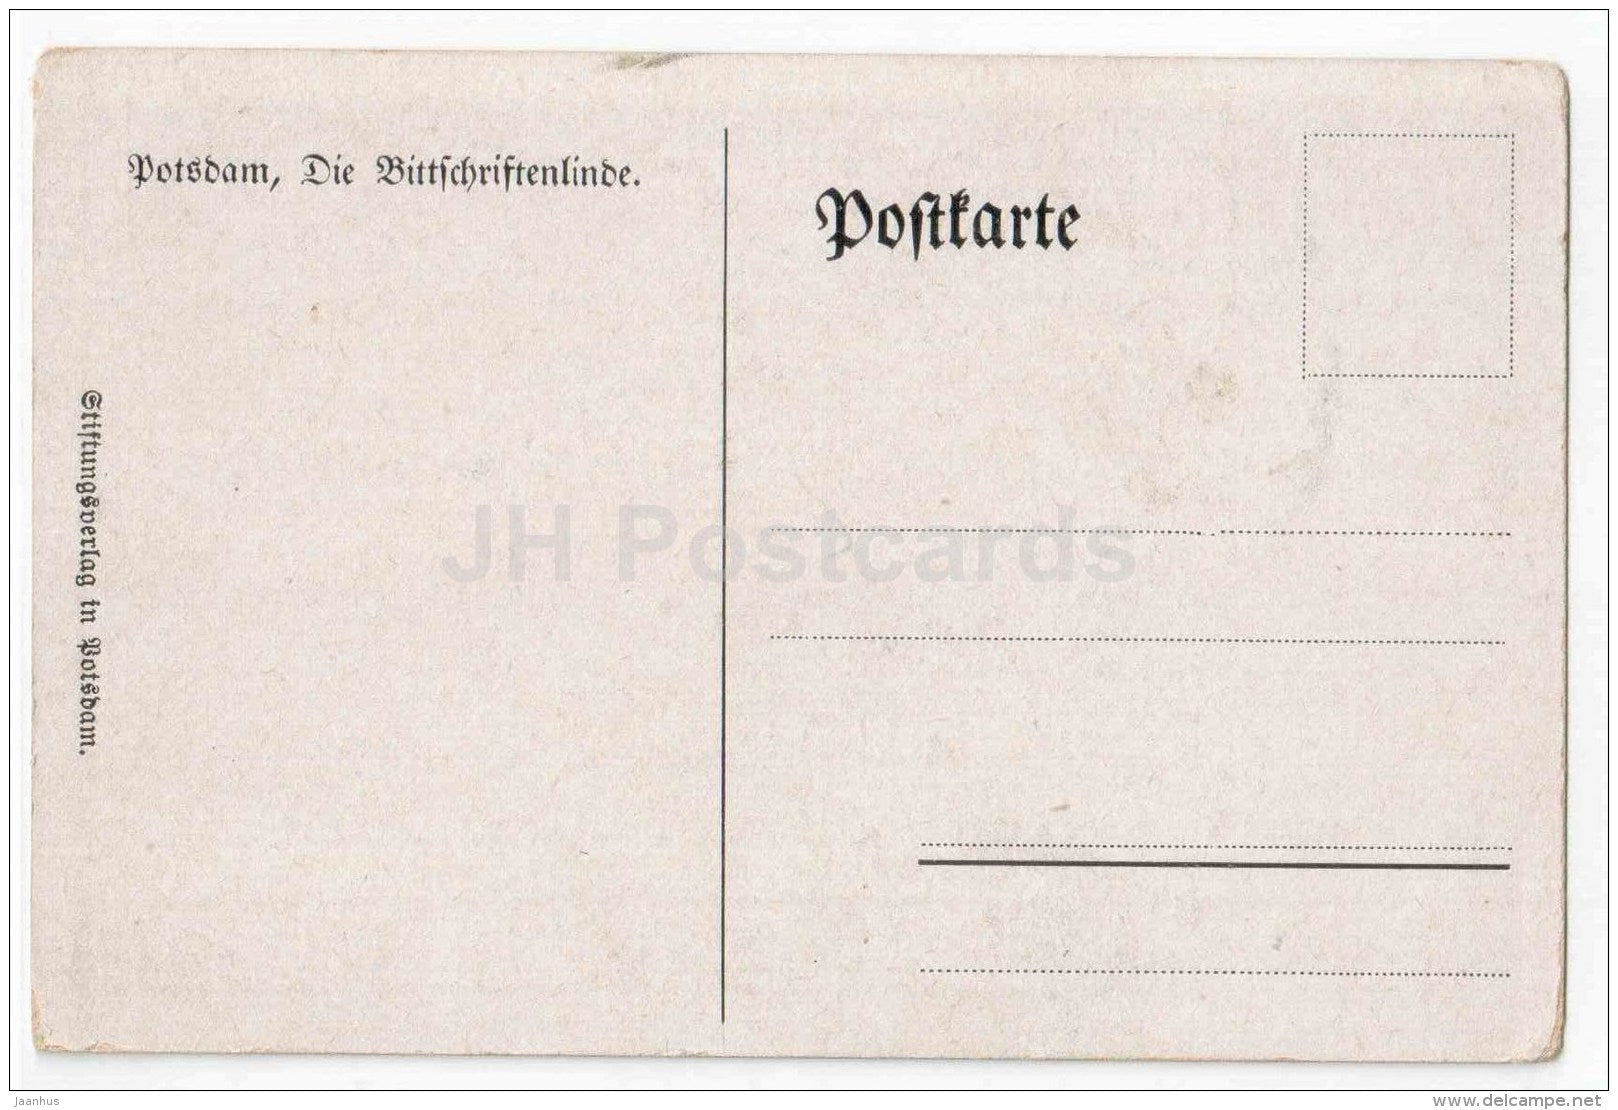 Die Bittschriftenlinde - Potsdam 1910 - illustration - Germany - old postcard - unused - JH Postcards